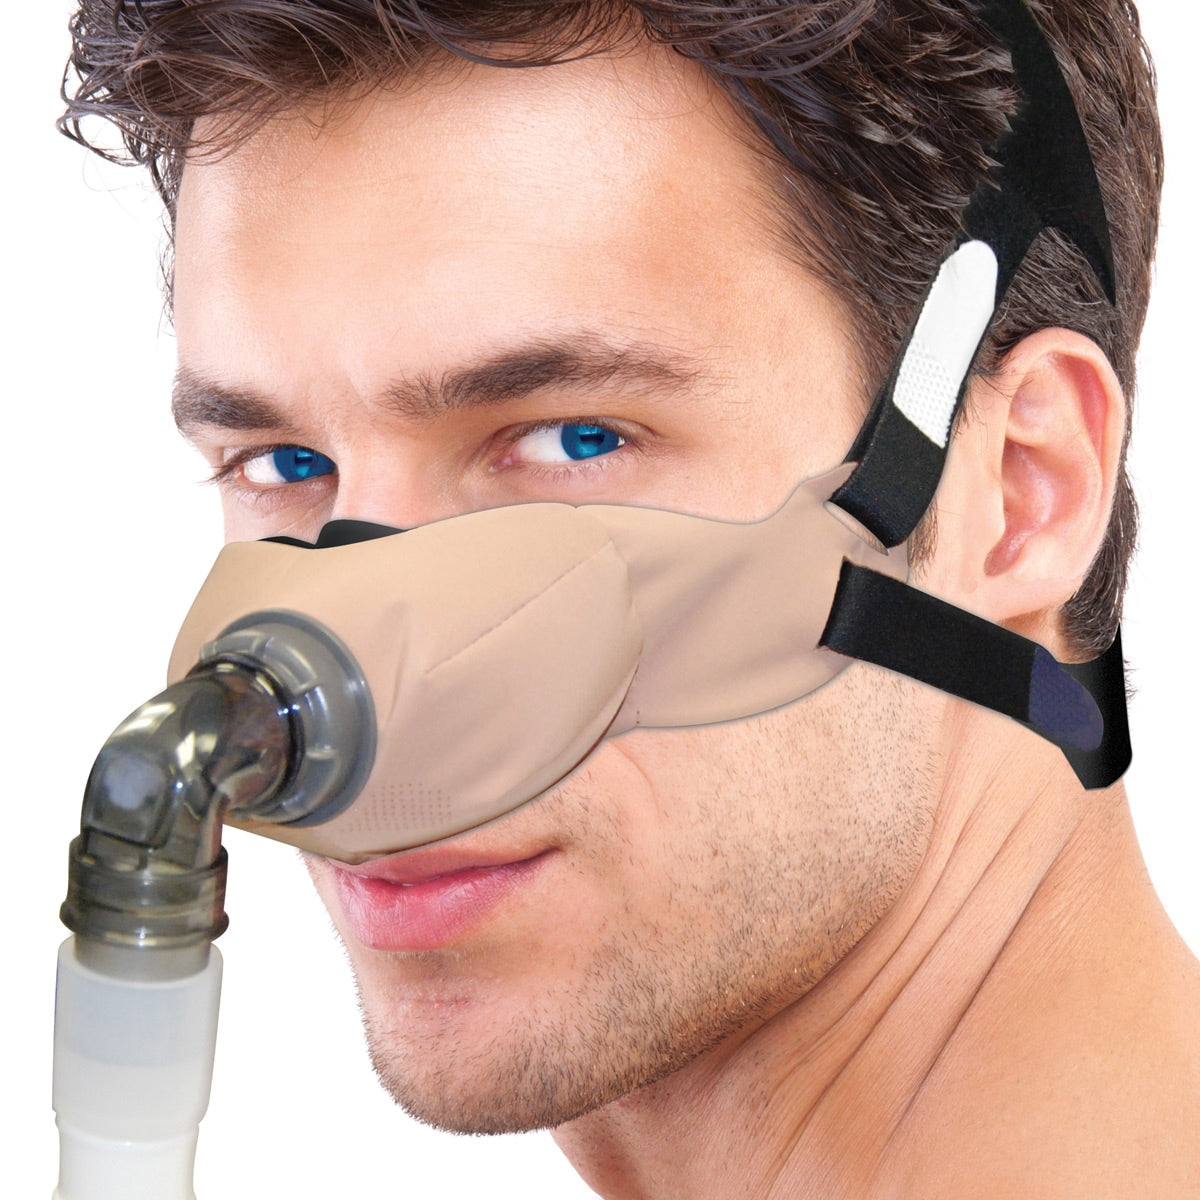 SleepWeaver Elan Soft Cloth Nasal CPAP/BiPAP Mask with Headgear